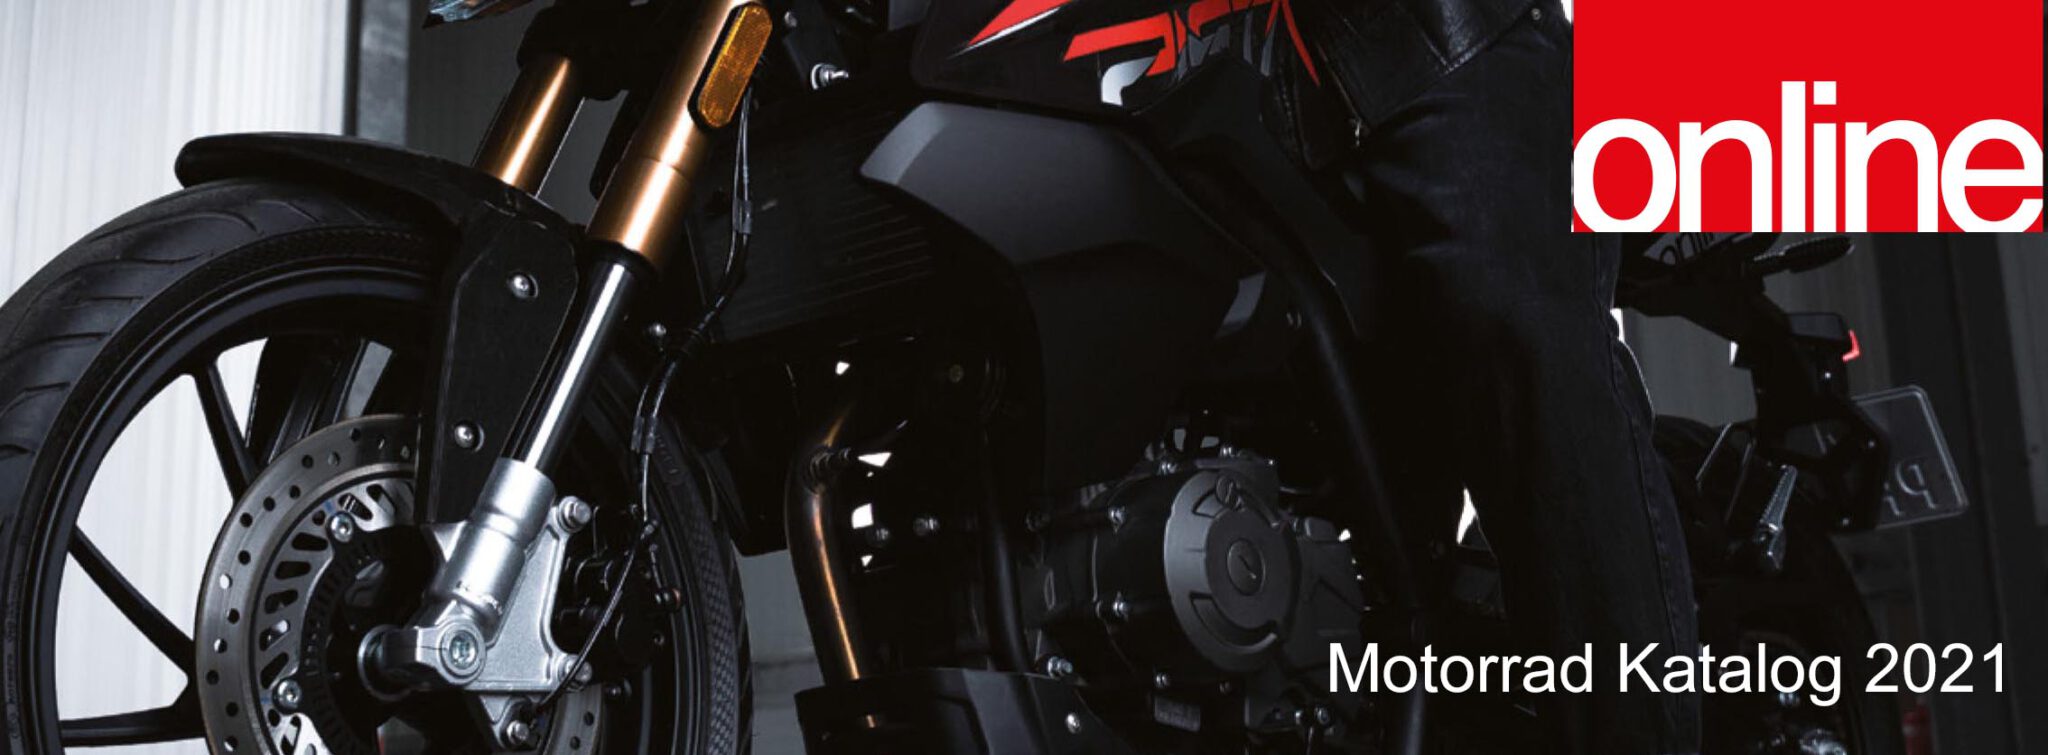 Online Motorrad Titelbild katalog